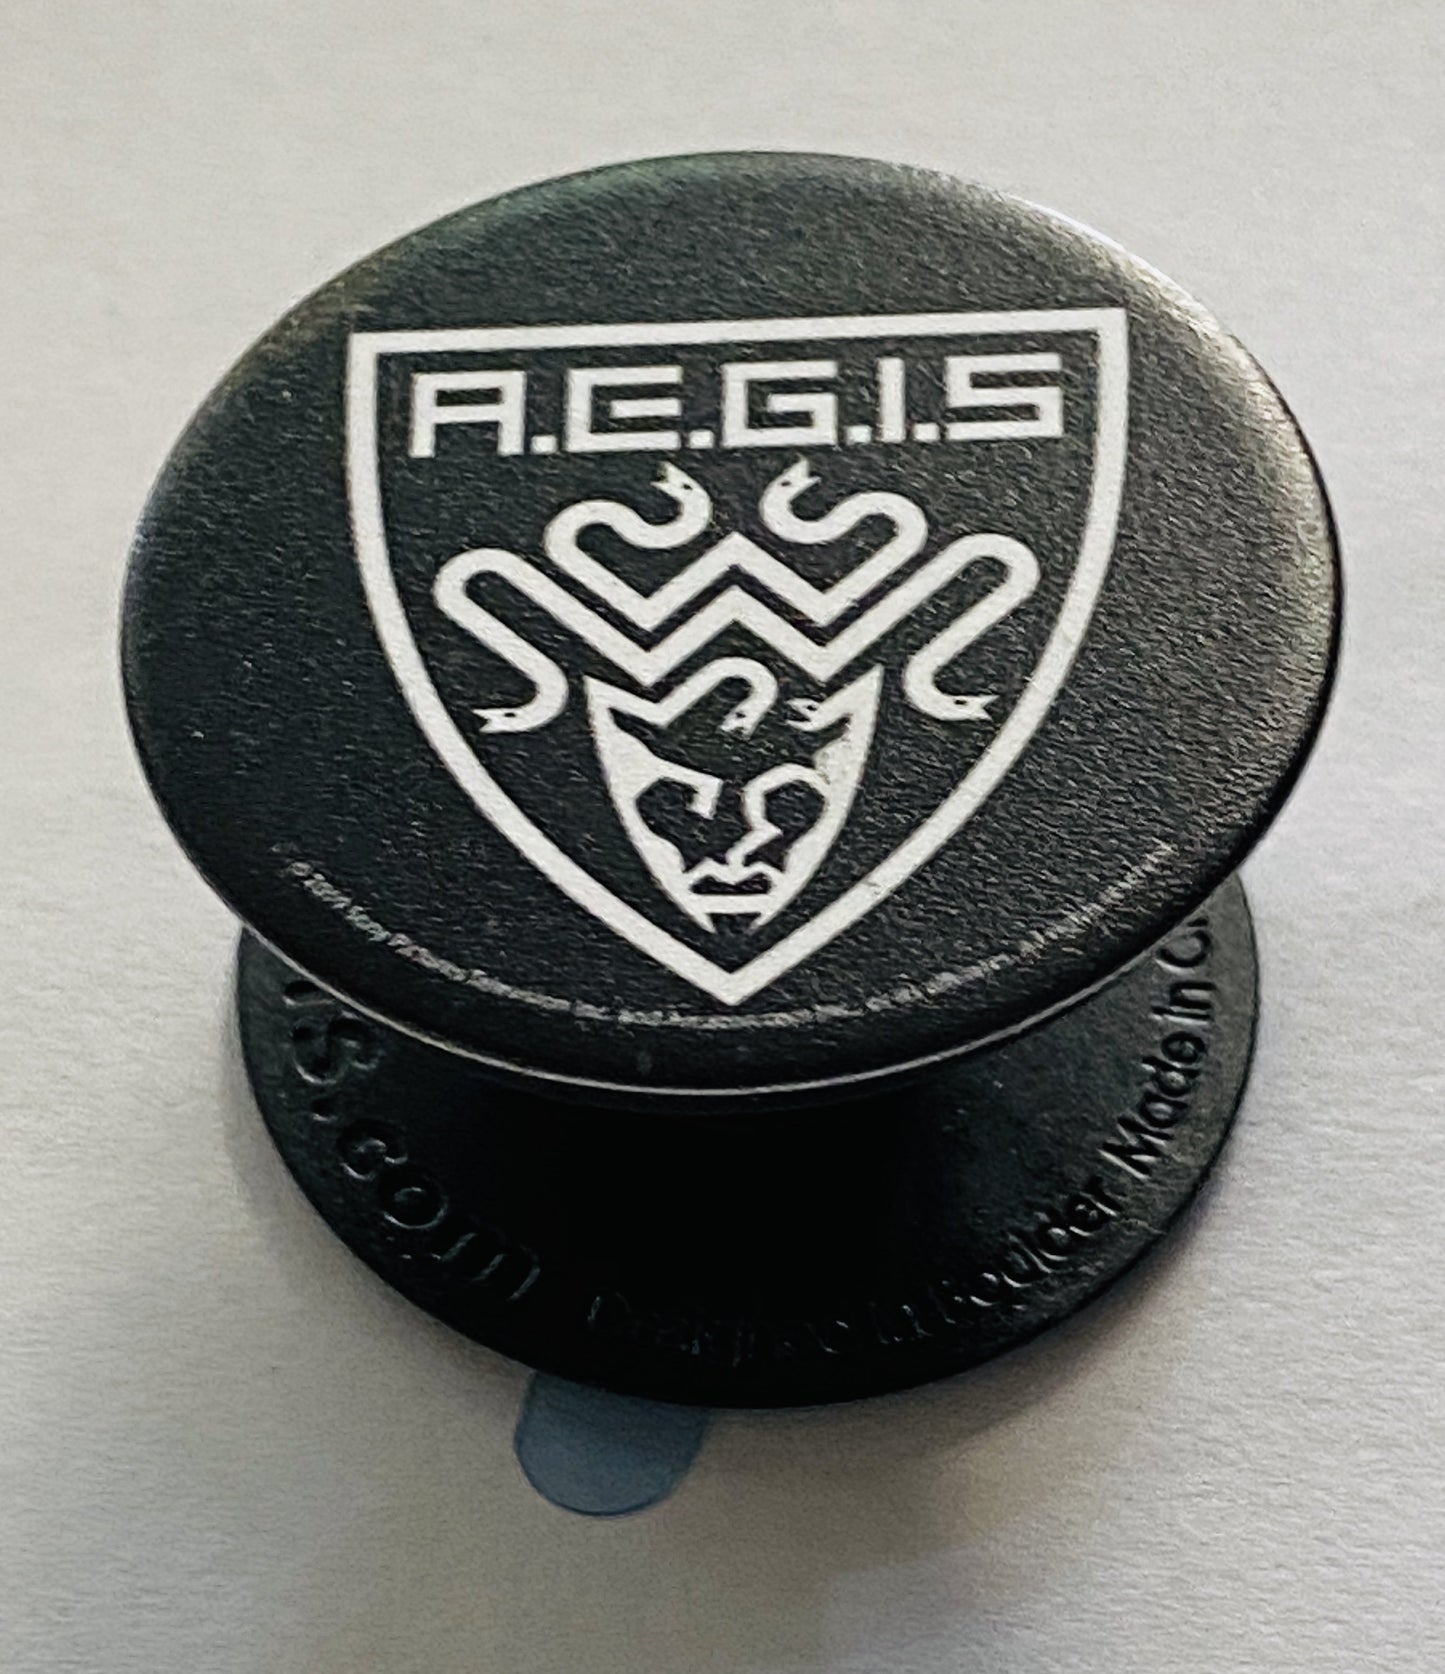 THE TICK: AEGIS Branded Phone Grip